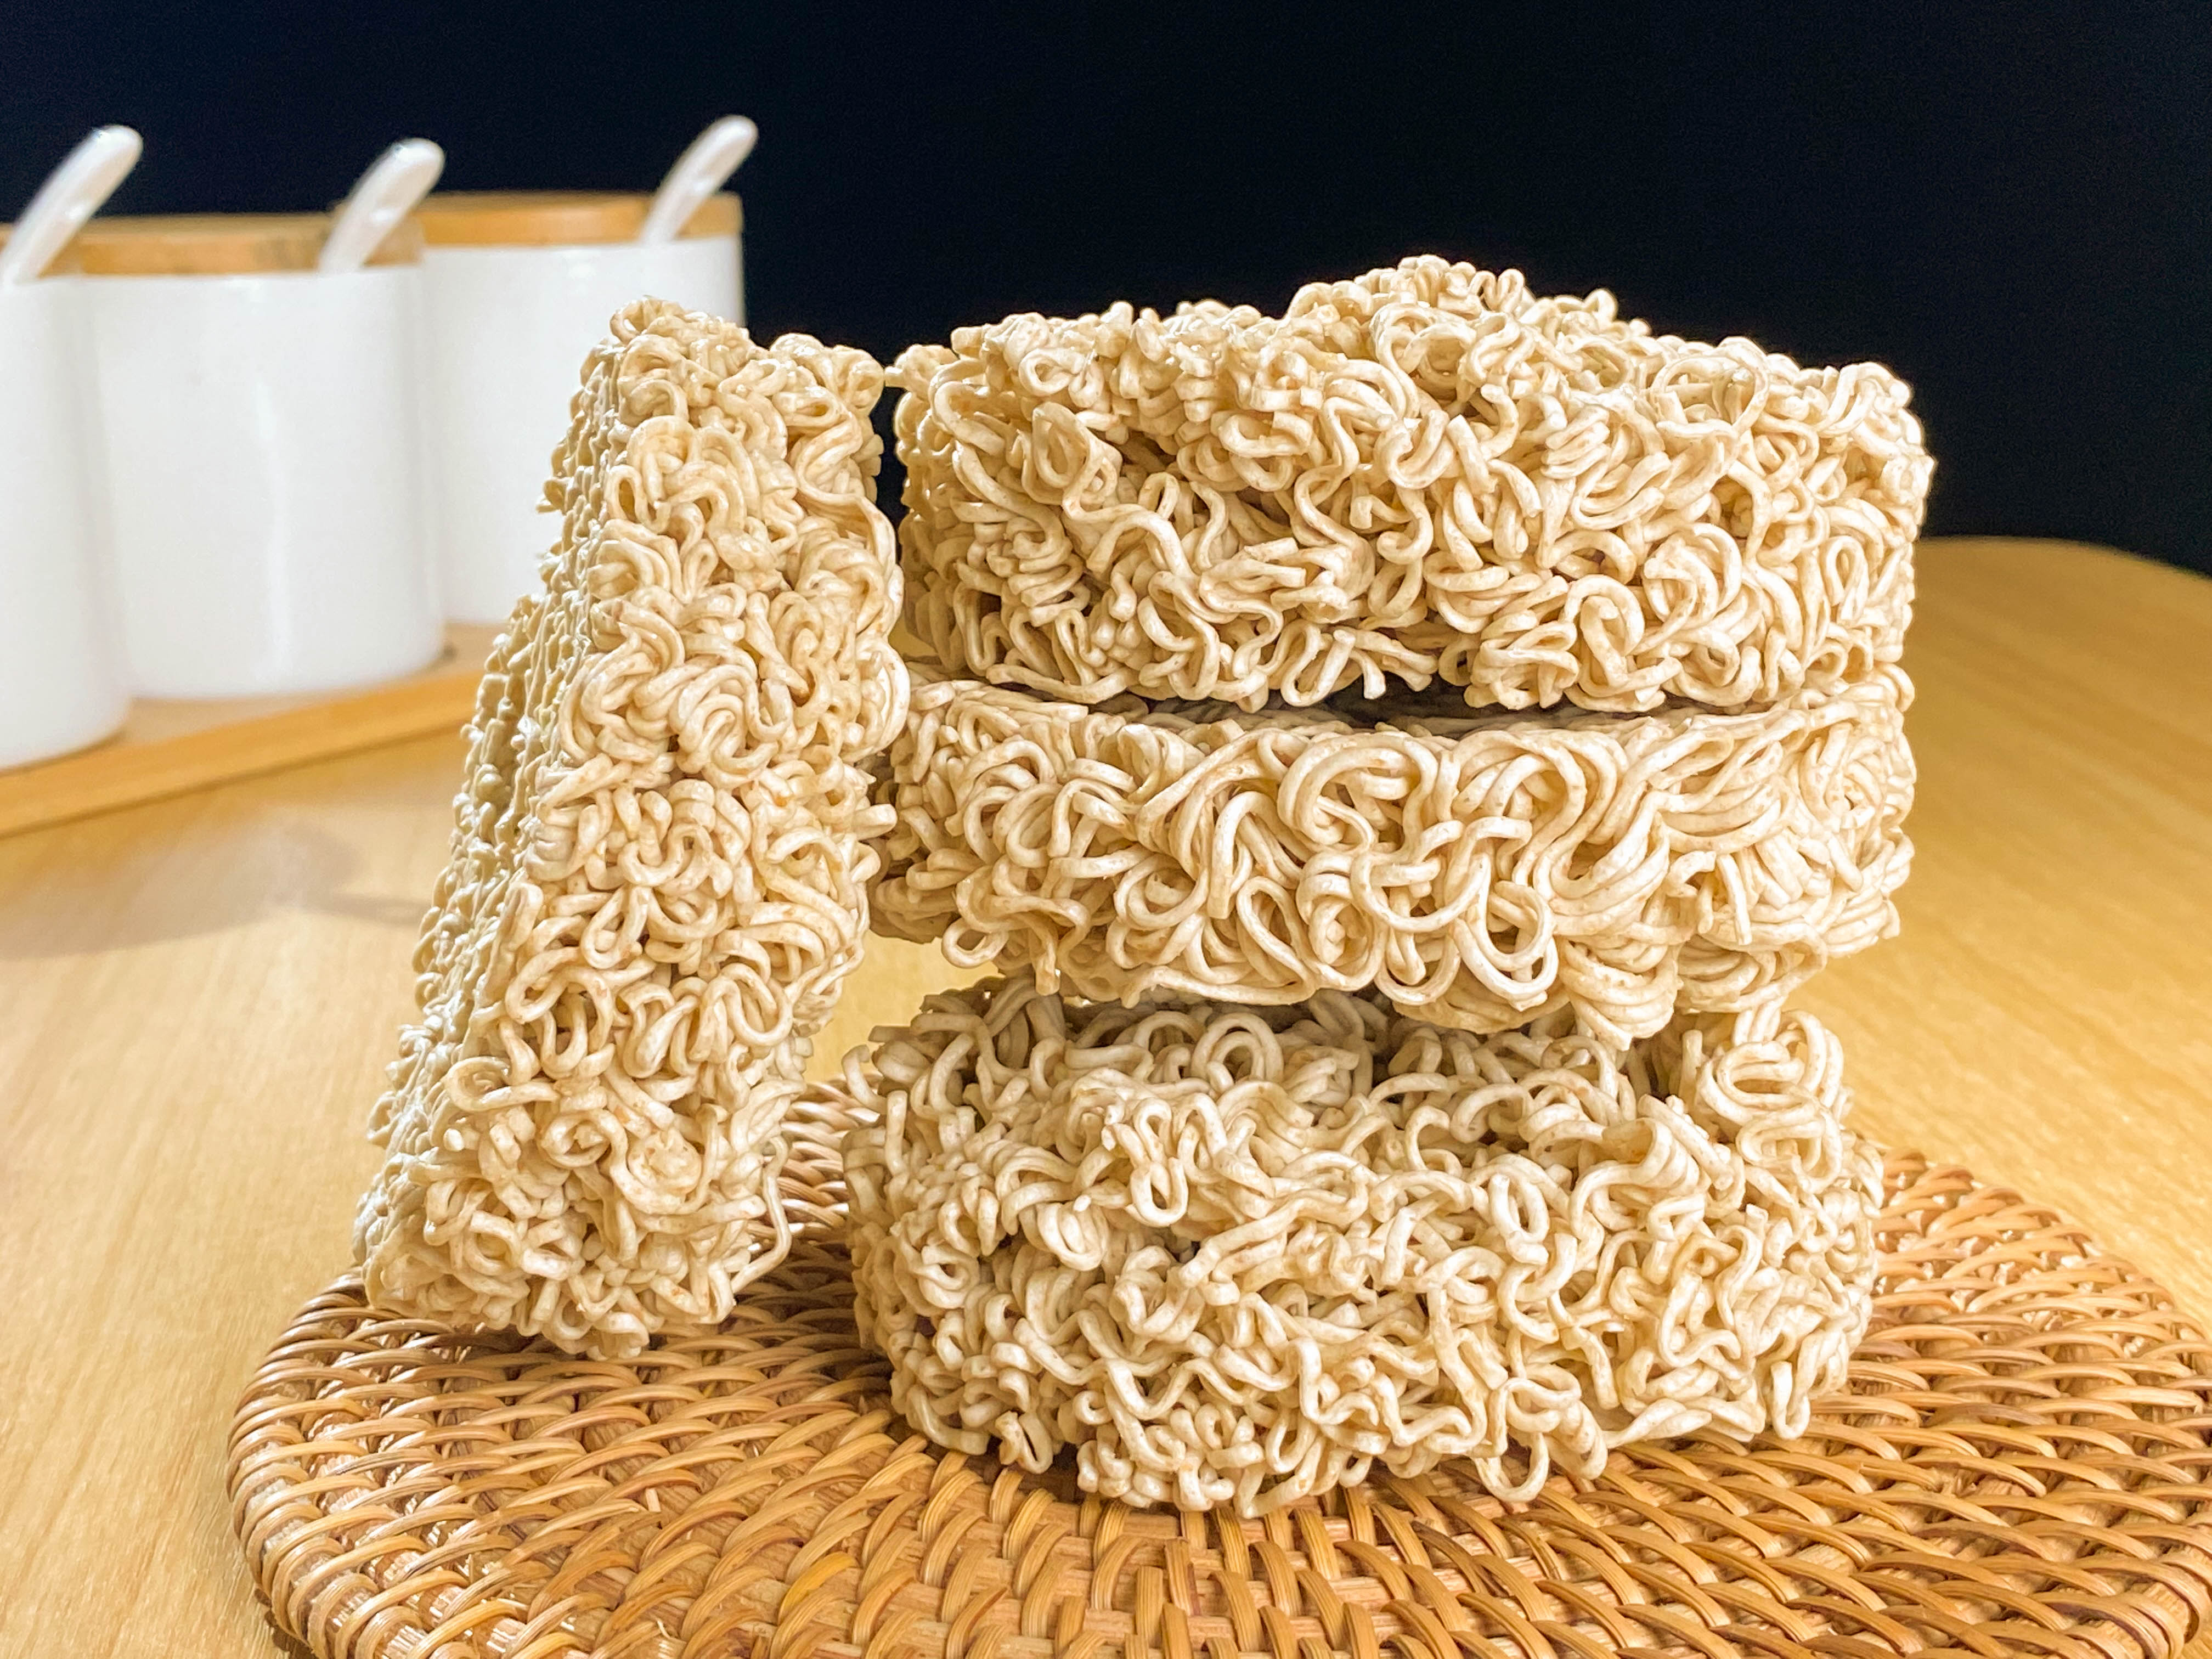 Noodles Factory: 3 Types Of Popular Noodles